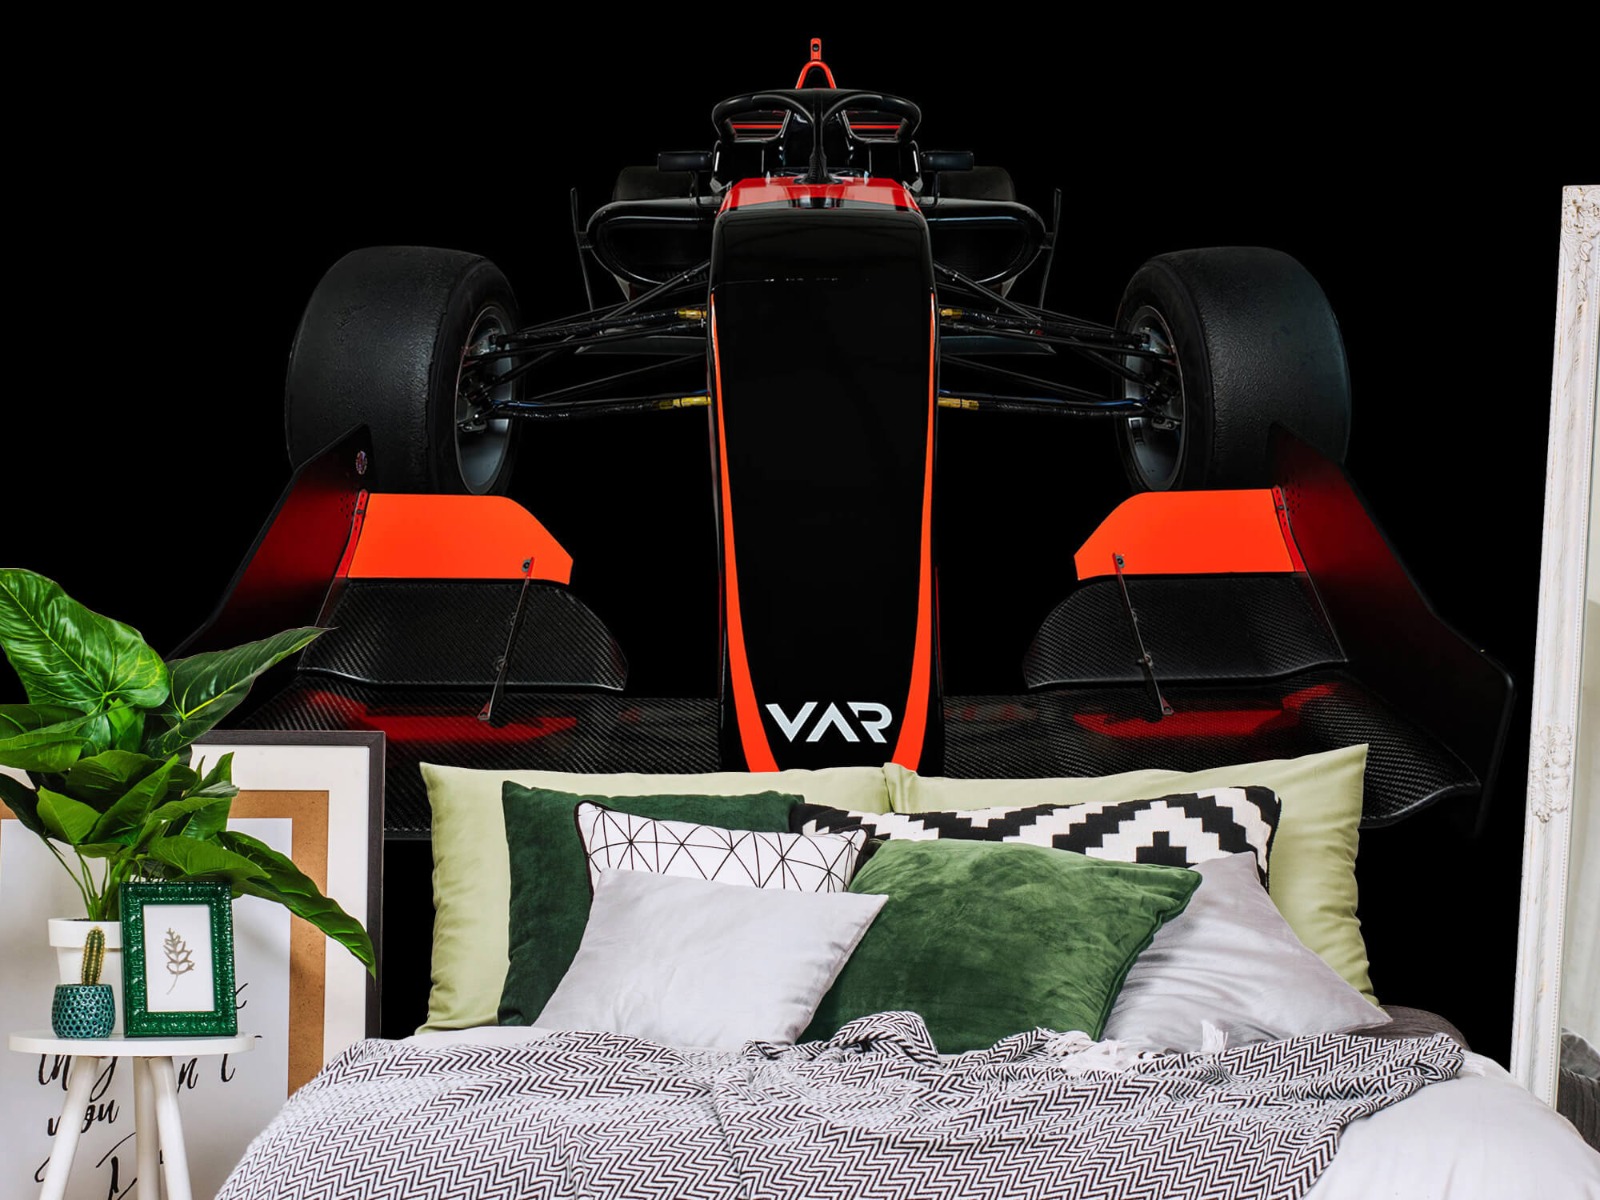 Sportauto's - Formule 3 - Lower front view - dark - Slaapkamer 13